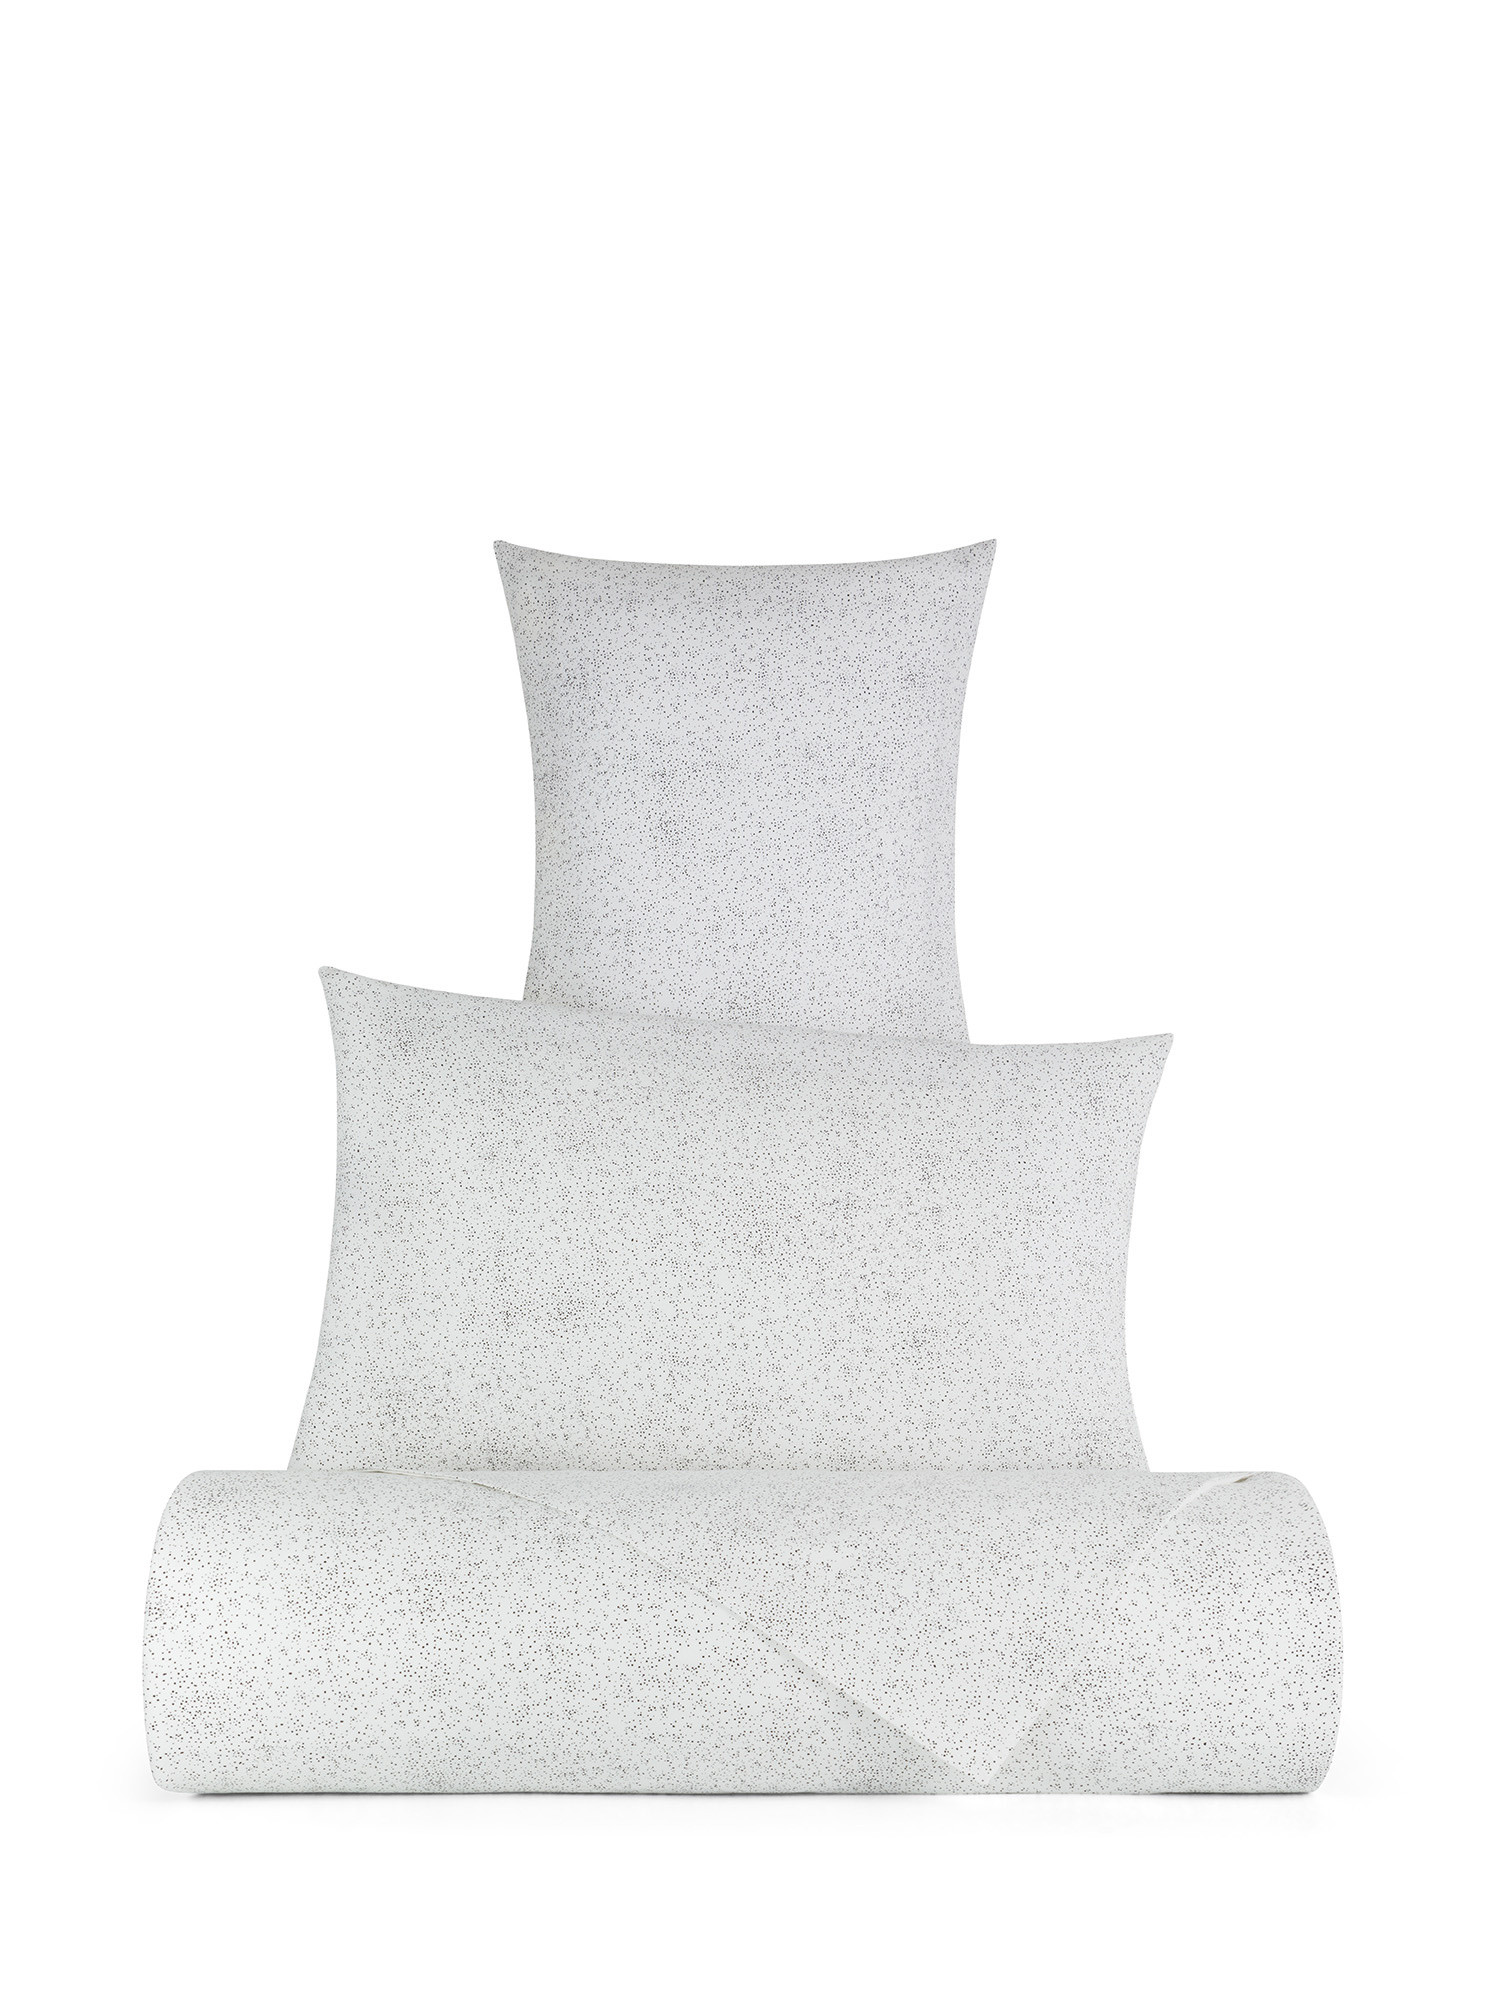 Dot pattern cotton duvet cover set, White, large image number 0